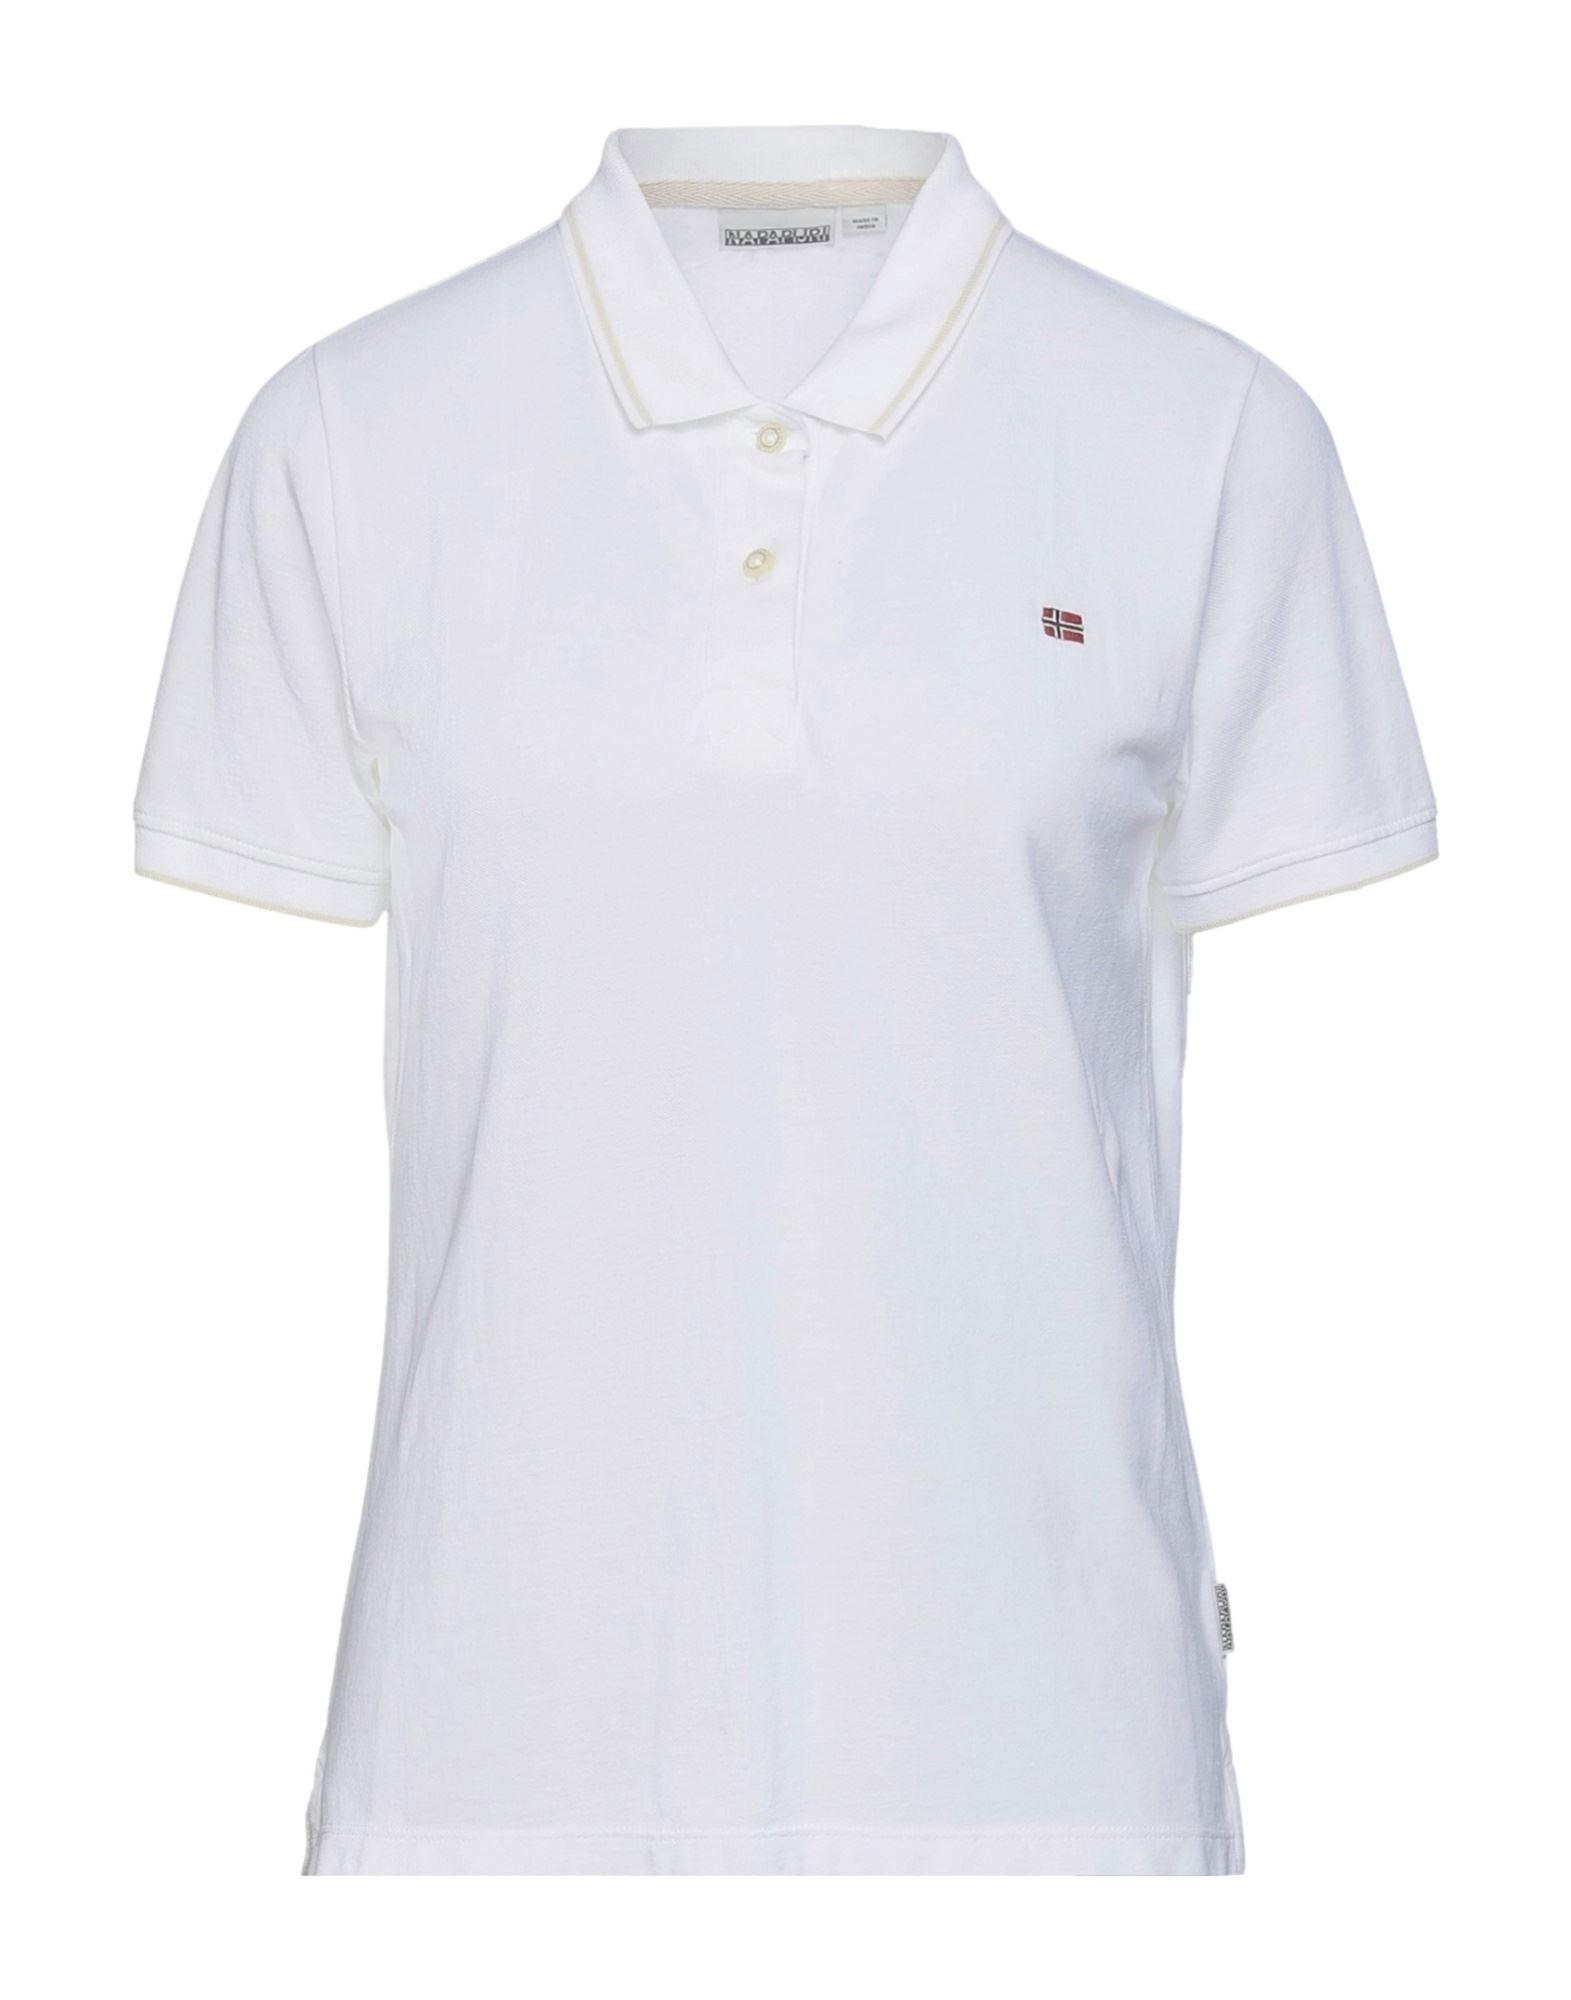 Napapijri Cotton Polo Shirt in White | Lyst